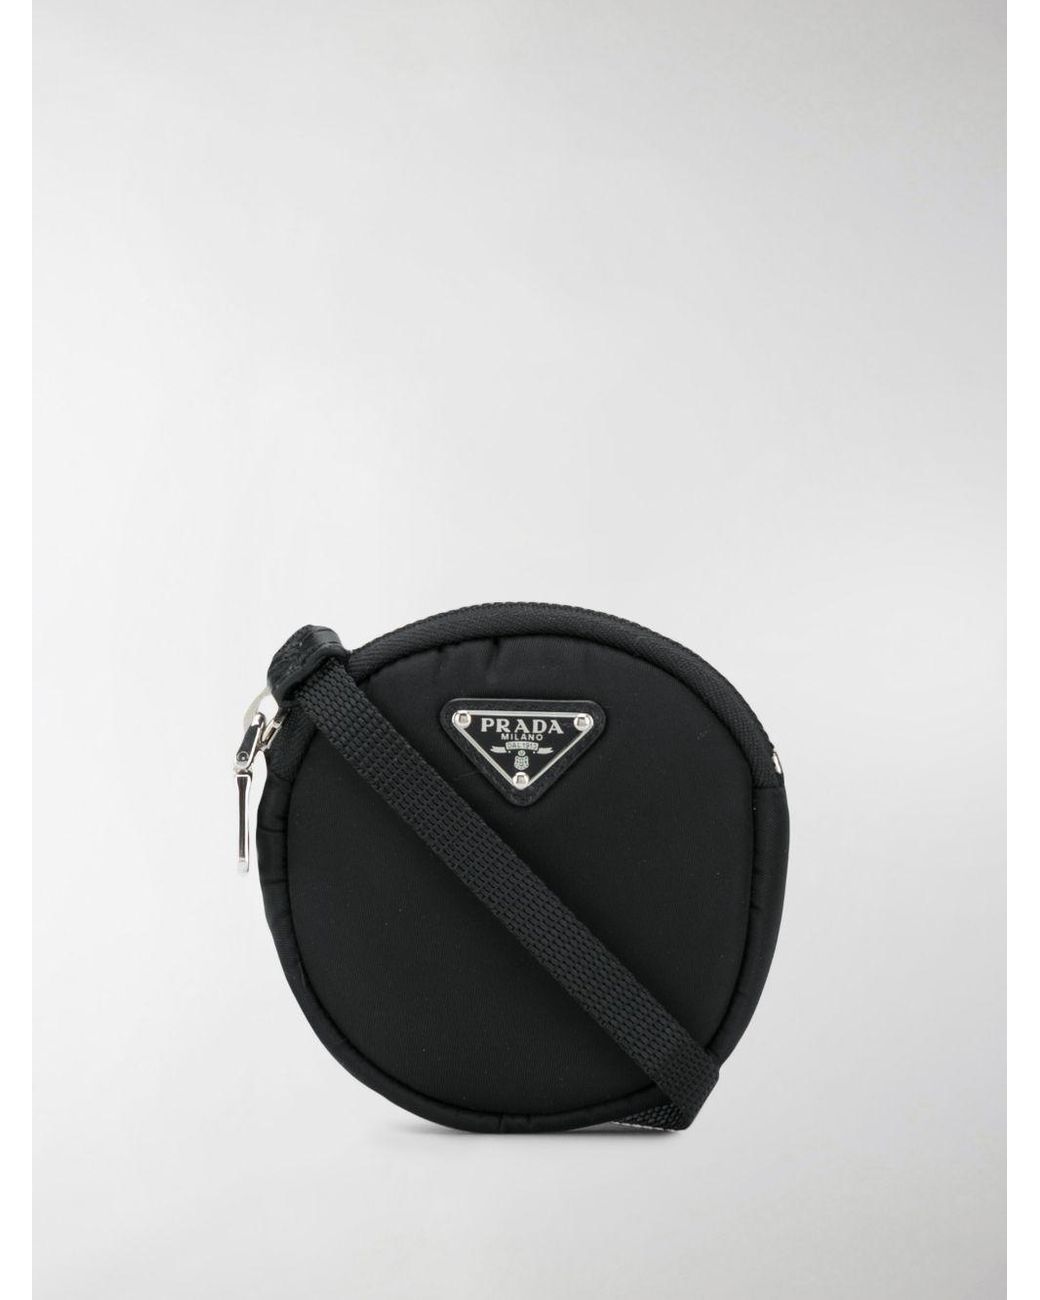 Prada Mini Round Crossbody Bag in Black | Lyst Australia